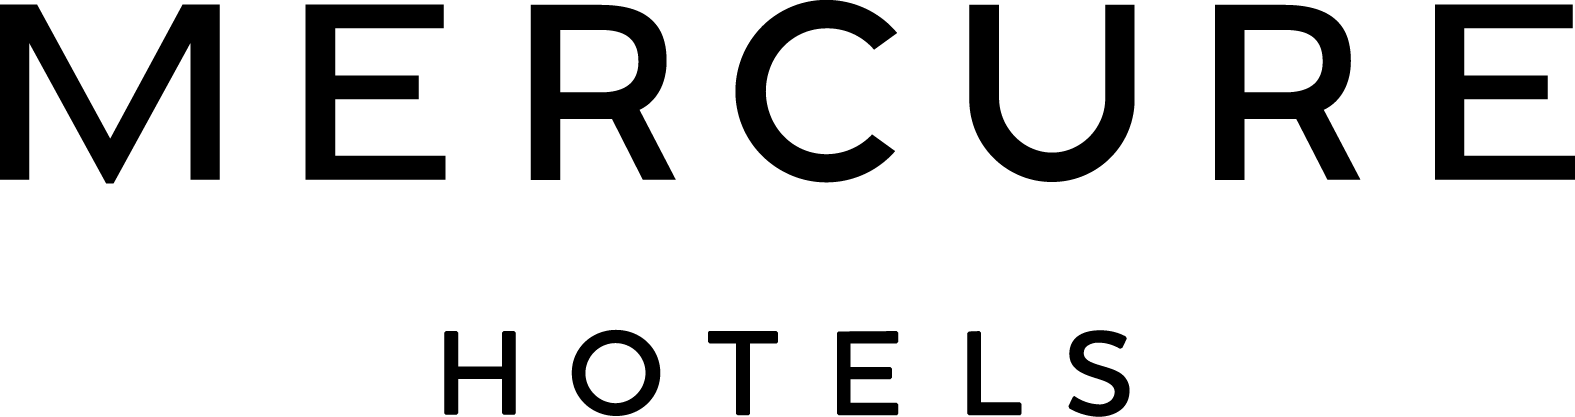 Logo Mercure - Cliente Auditecnic